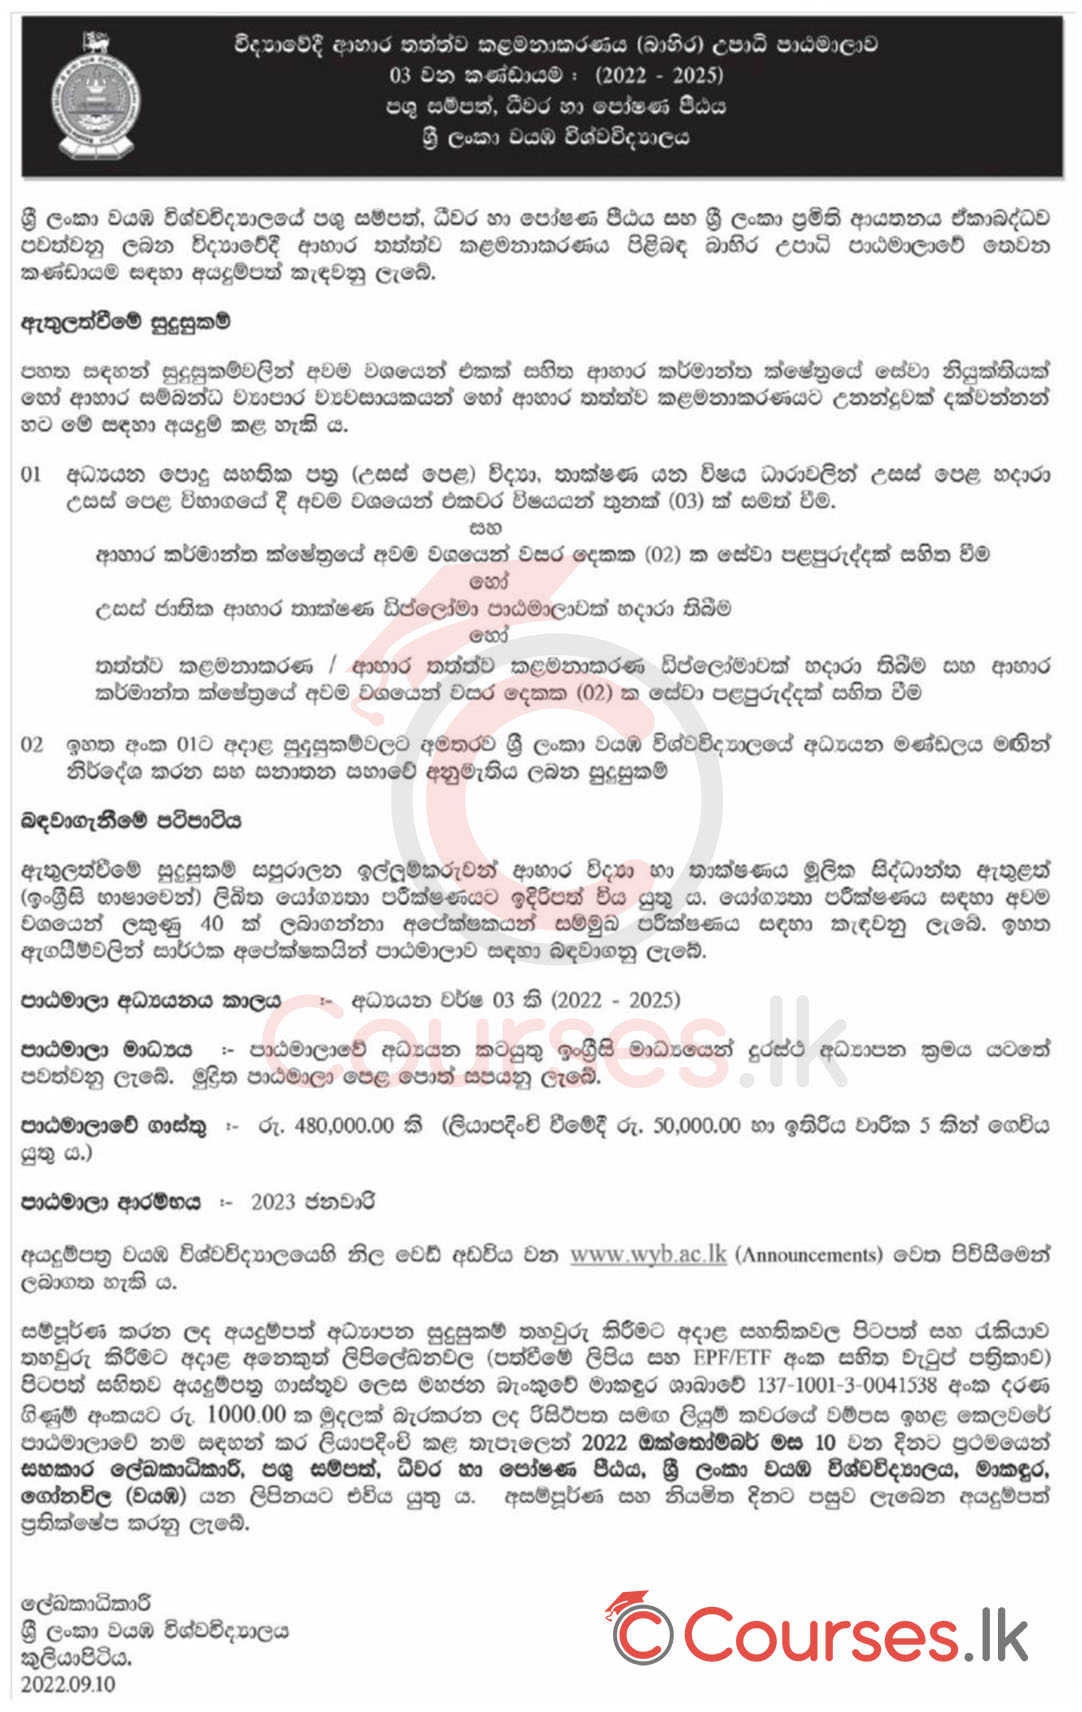 BSc in Food Quality Management (External) Degree Programme 2022 - Wayamba University of Sri Lanka (WUSL)